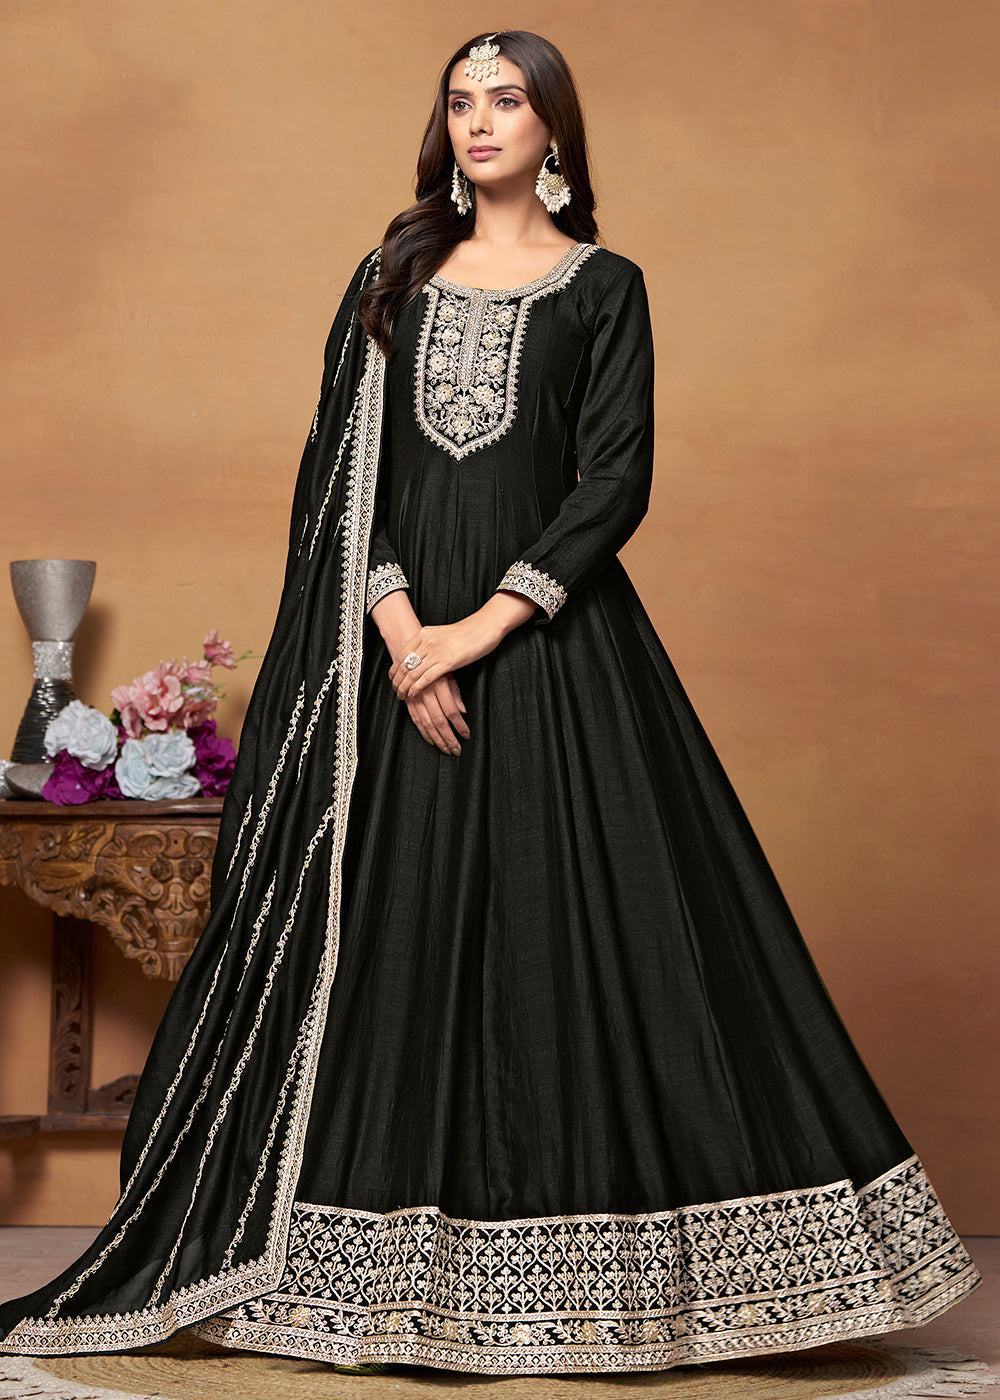 Buy Now Amazing Art Silk Black Embroidered Festive Anarkali Suit Online in USA, UK, Australia, New Zealand, Canada & Worldwide at Empress Clothing. 